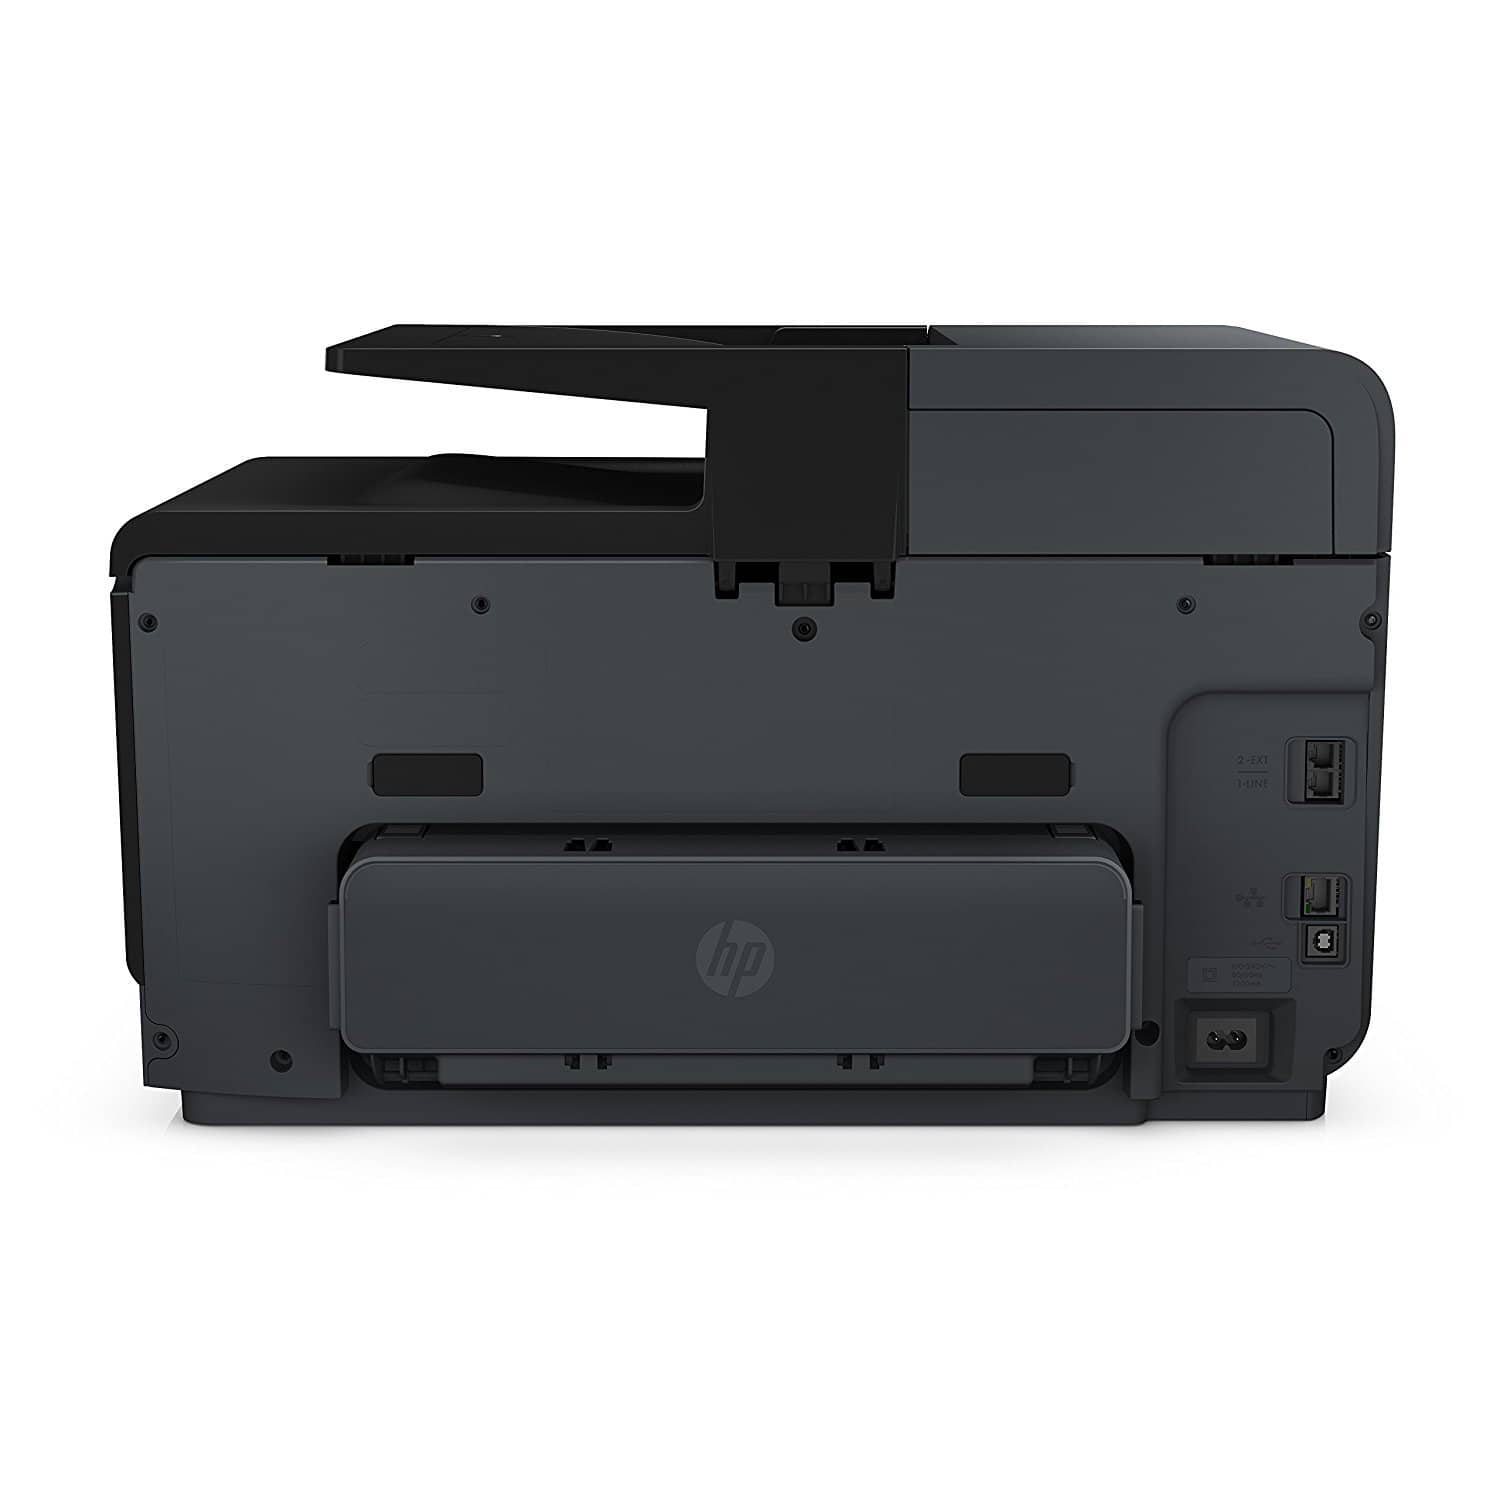 HP OfficeJet Pro 8620 Wireless All-in-One Photo Printer